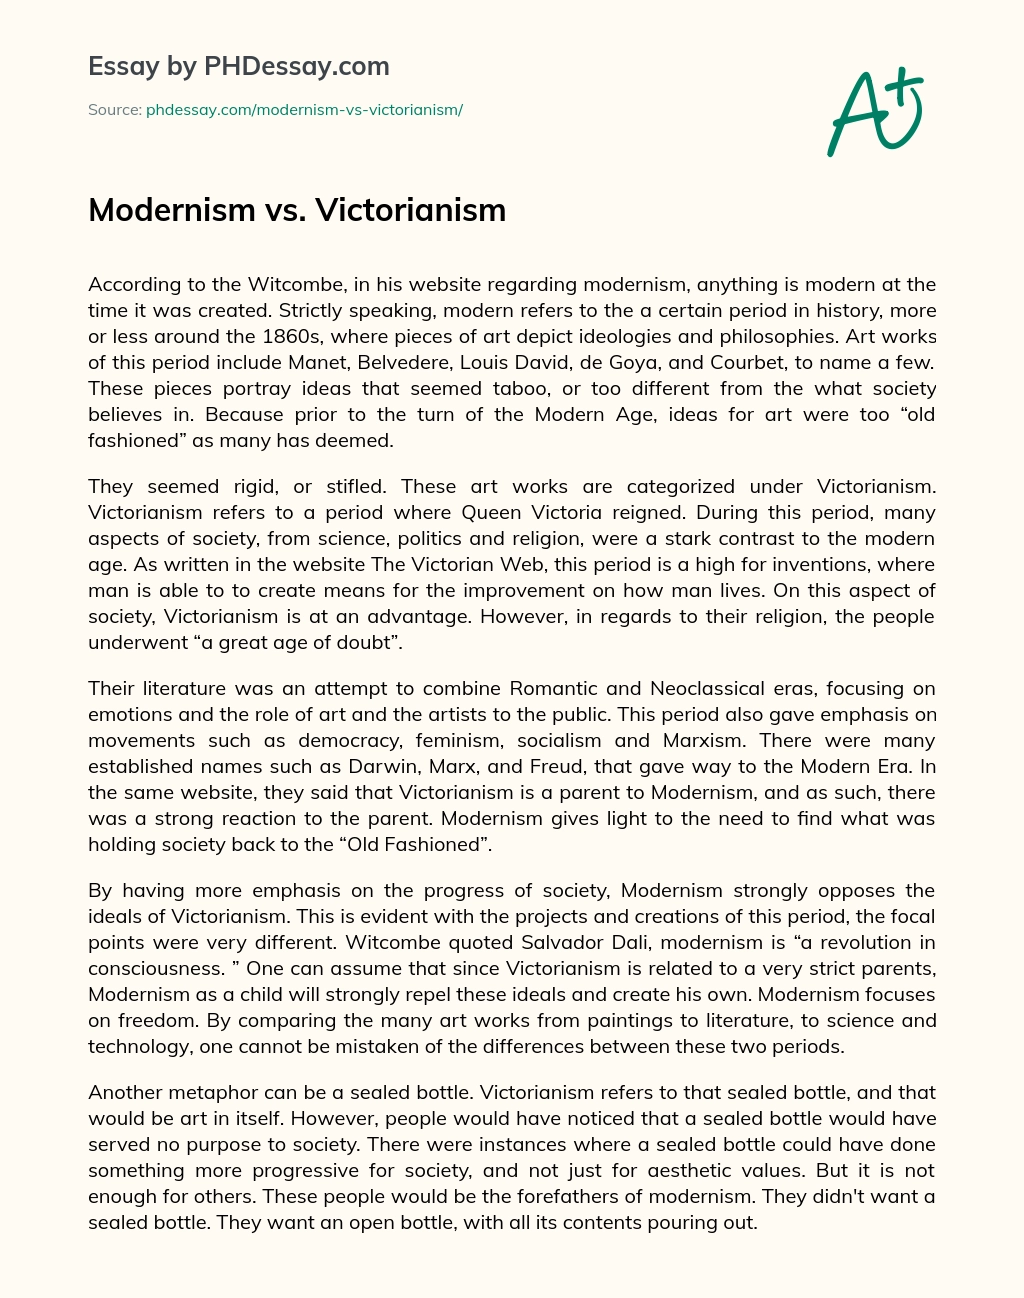 Modernism vs. Victorianism essay